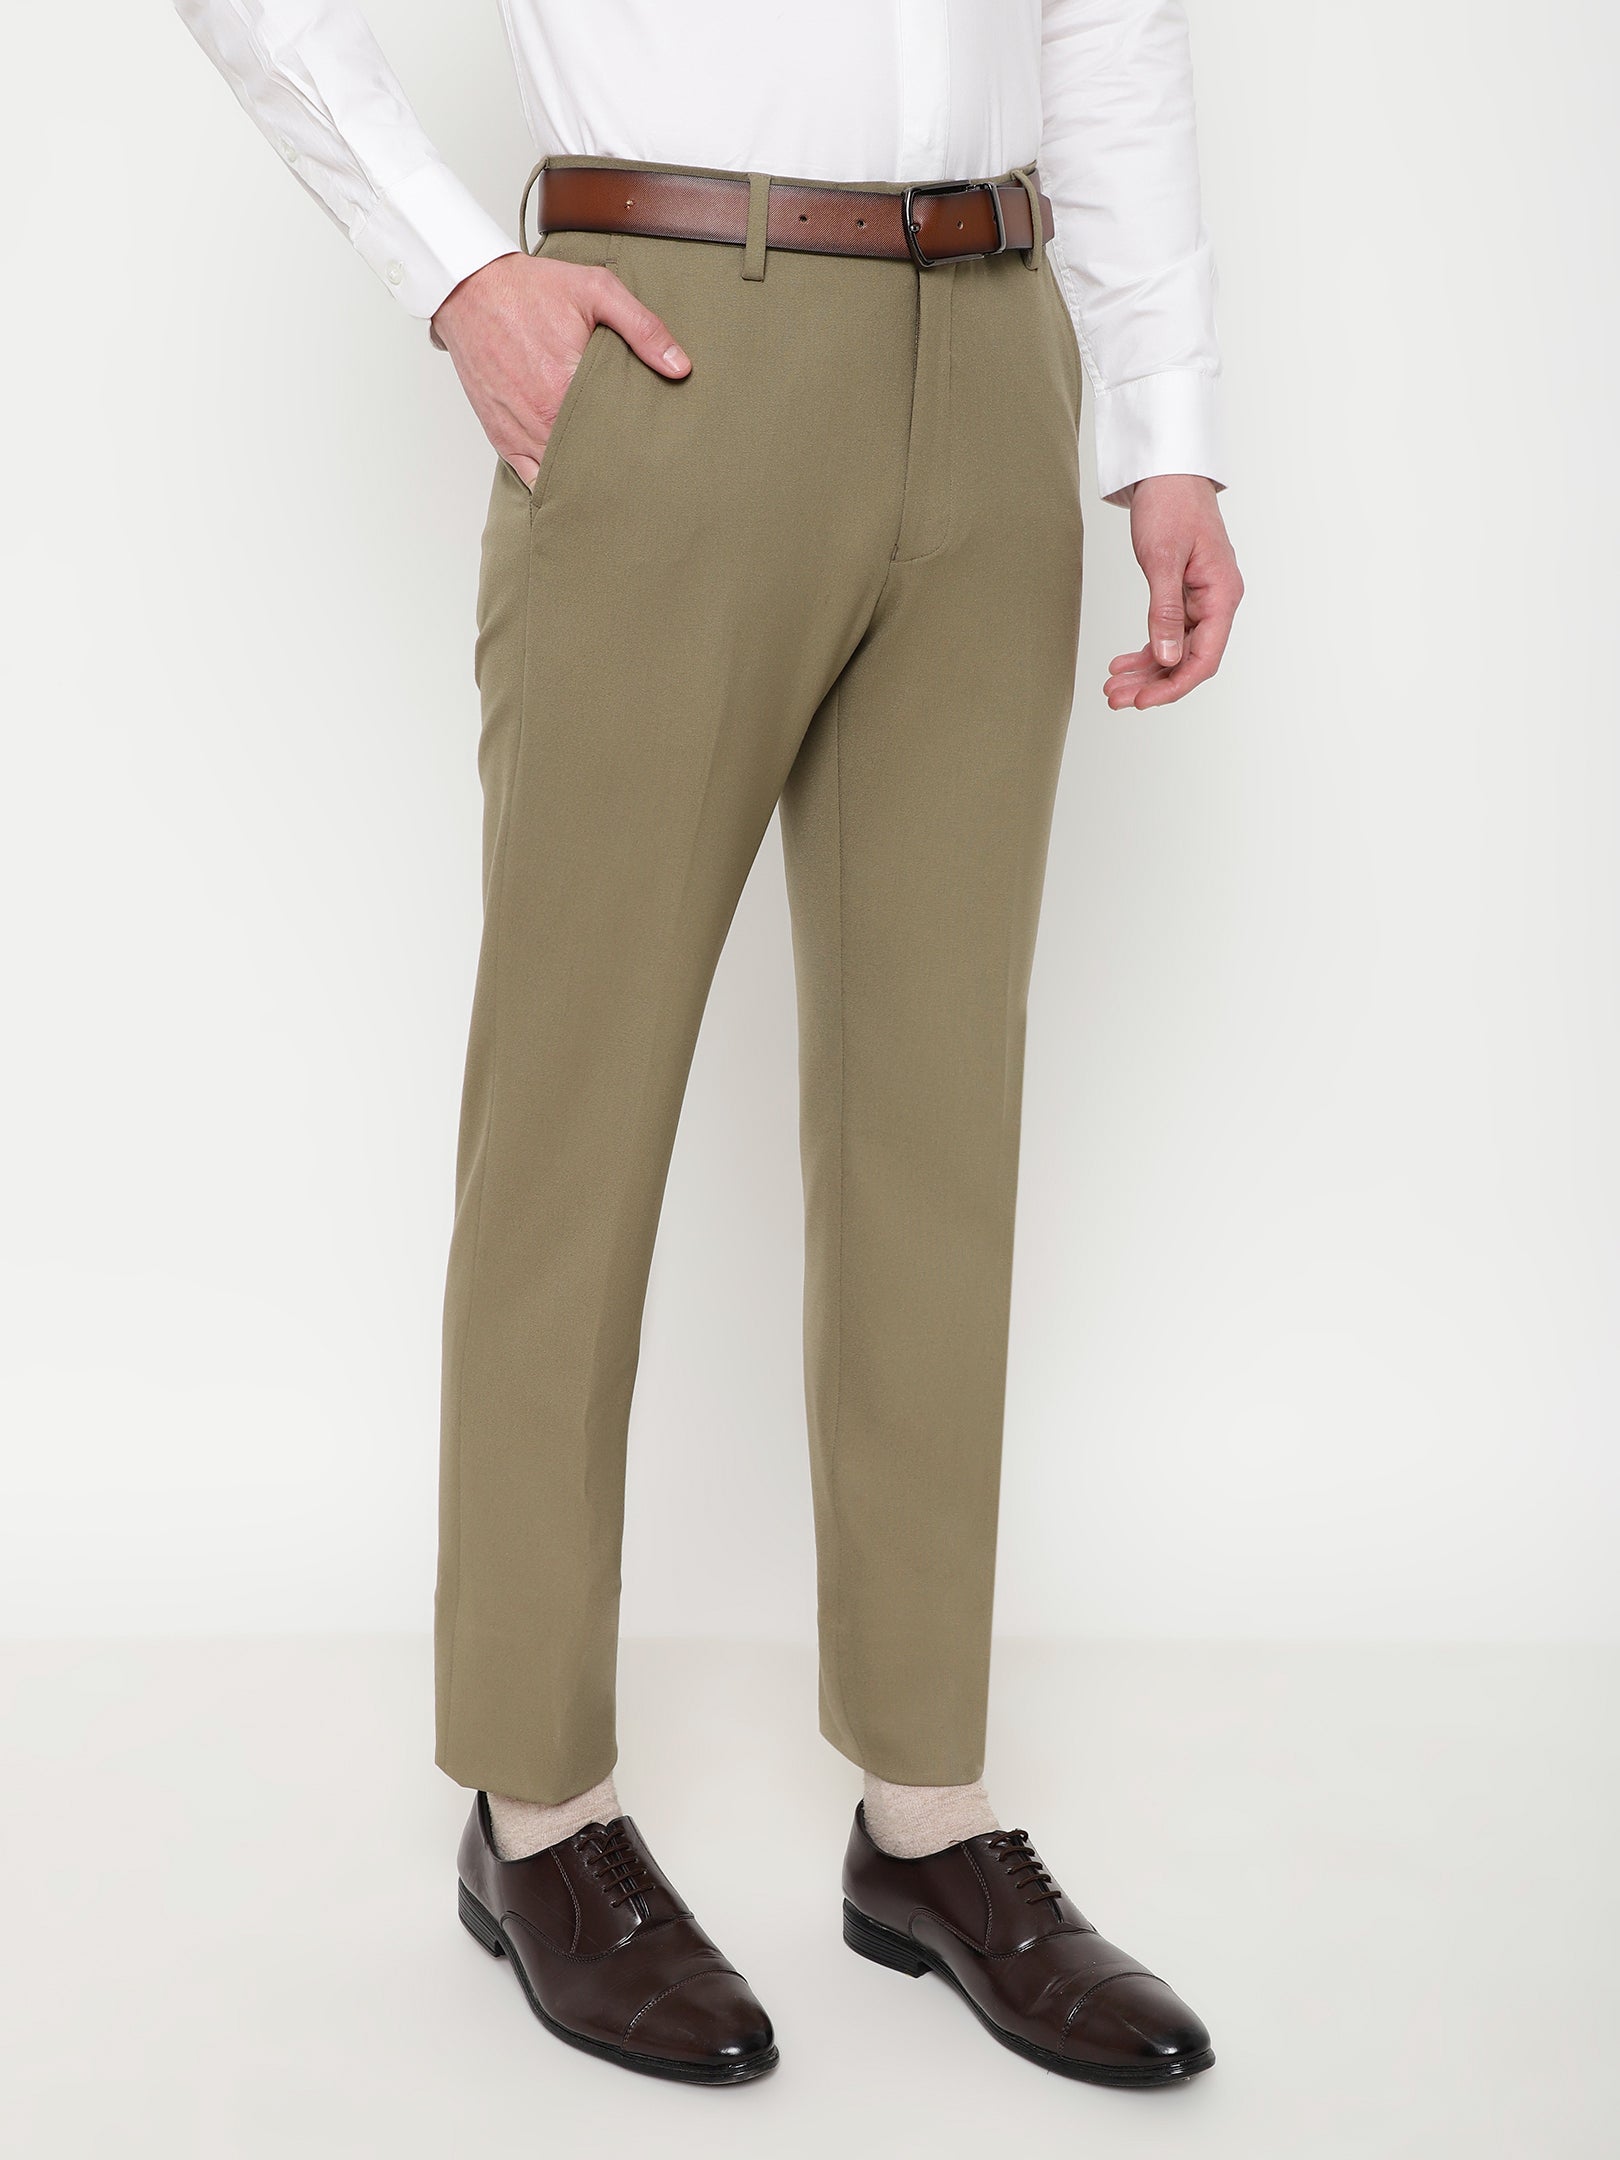 FSYSM Autumn Men Solid Color Casual Pants Men Straight Slight Elastic Ankle-Length  Formal Trousers Men (Color : C, Size : 33 Code) : Amazon.ca: Clothing,  Shoes & Accessories